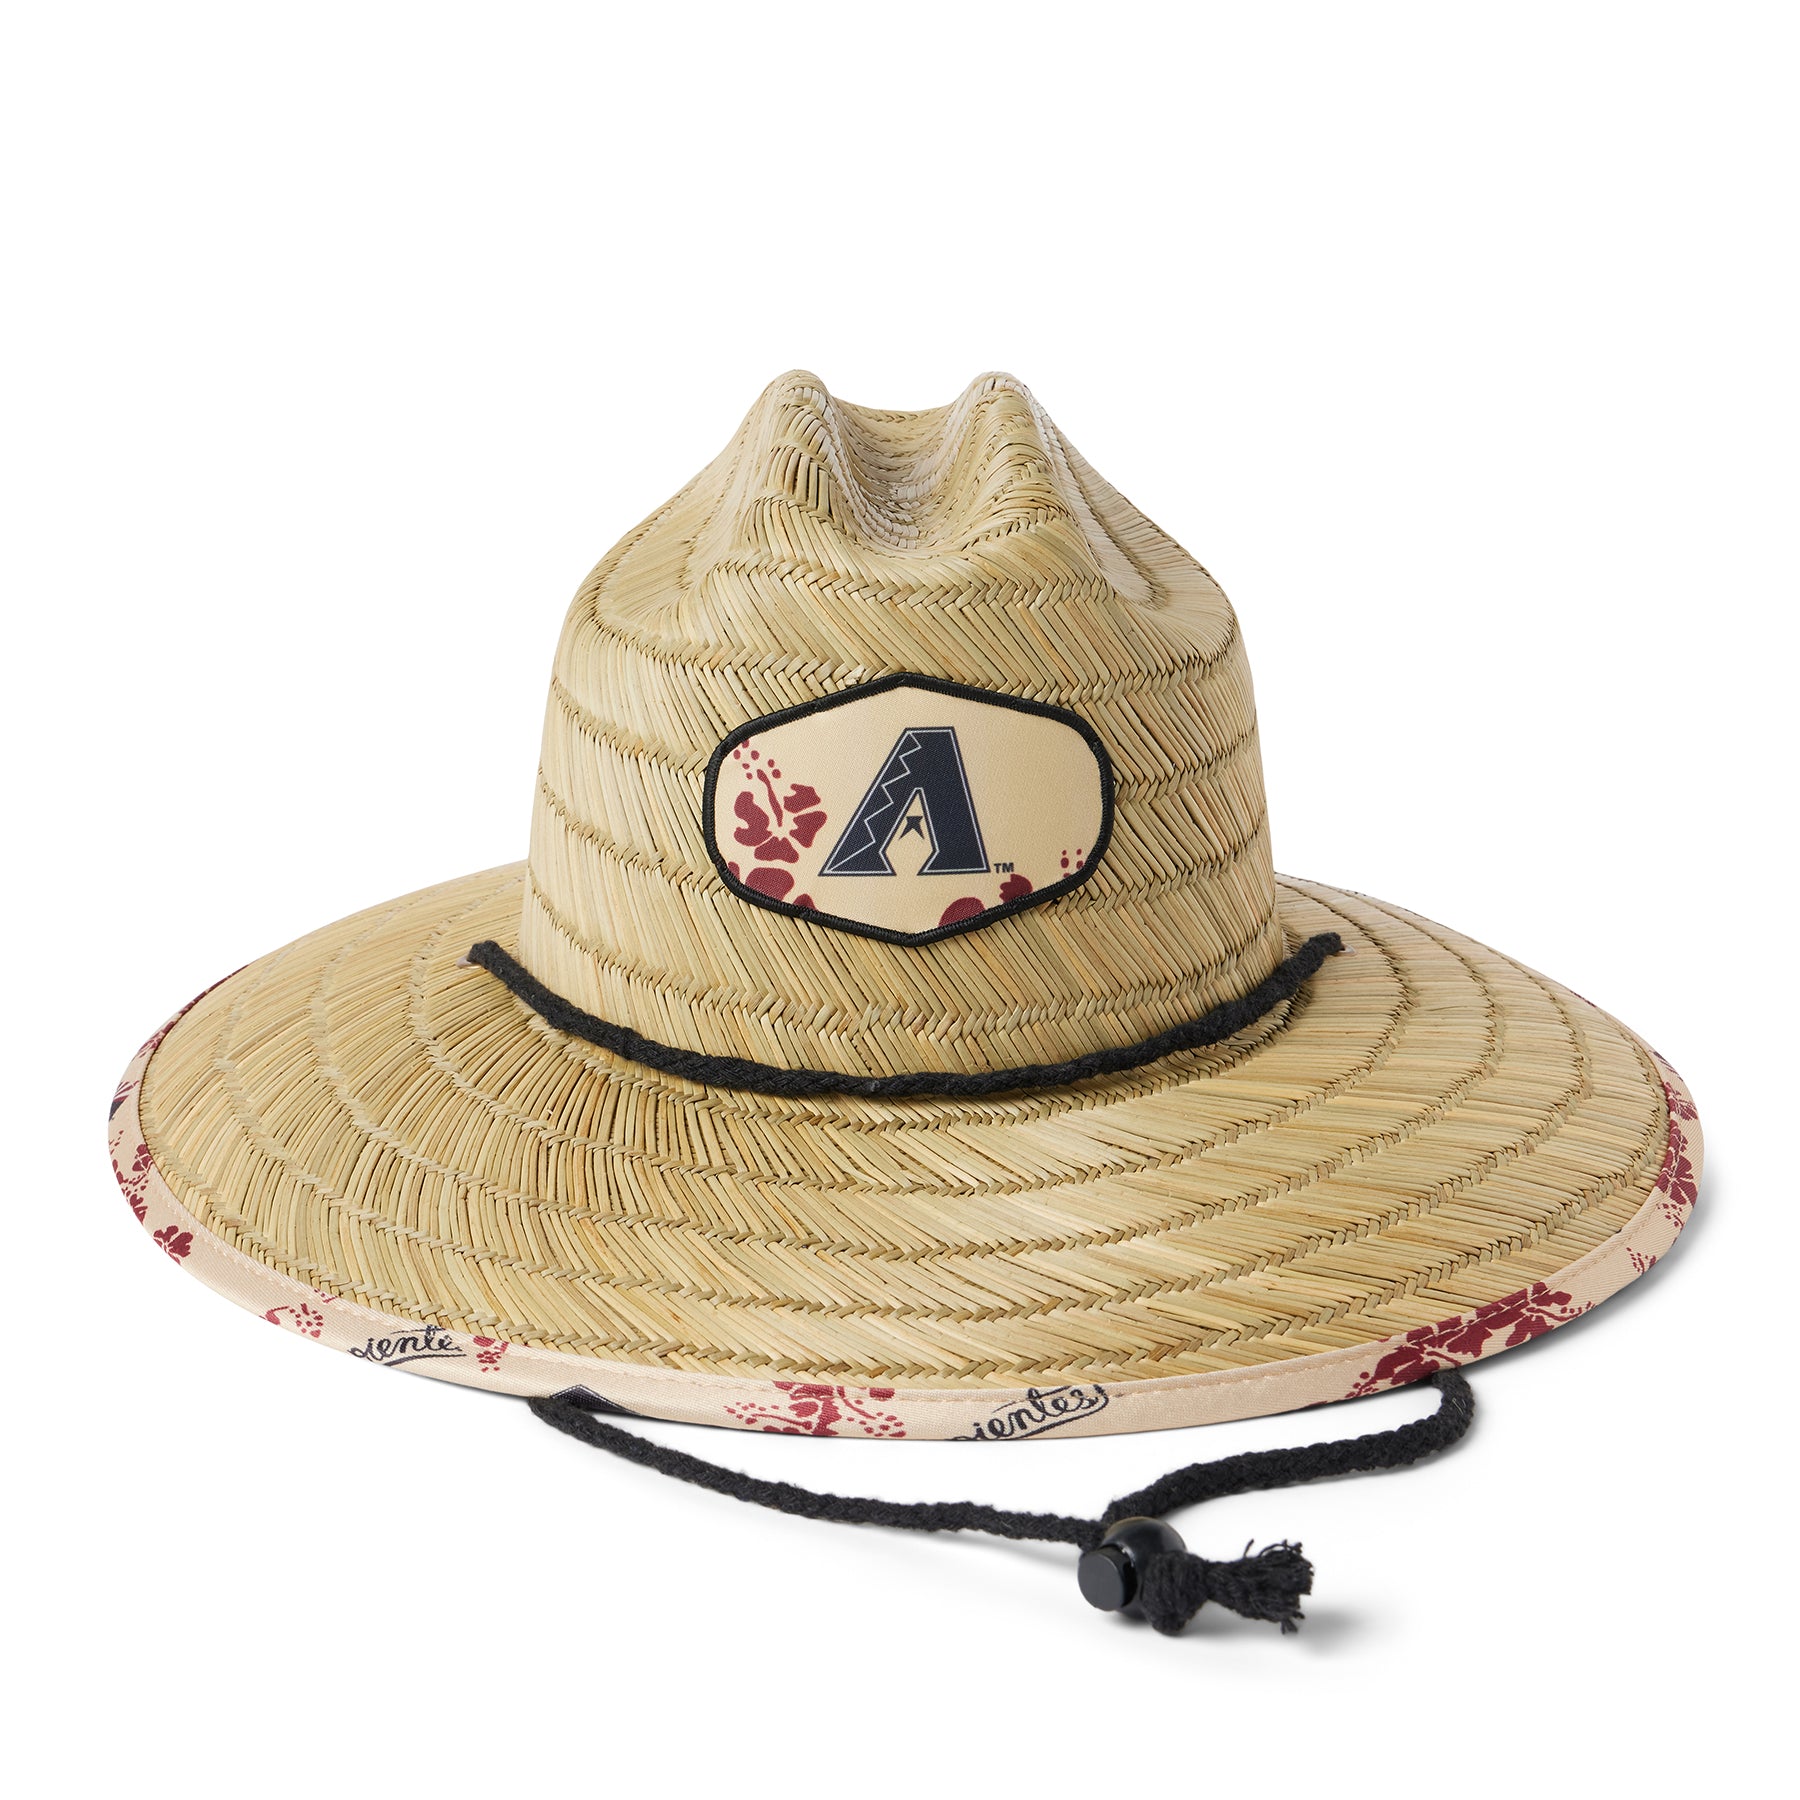 Exclusive New Arizona Diamondbacks Serpientes Fitted Hat MLB Club Size 7 1/2